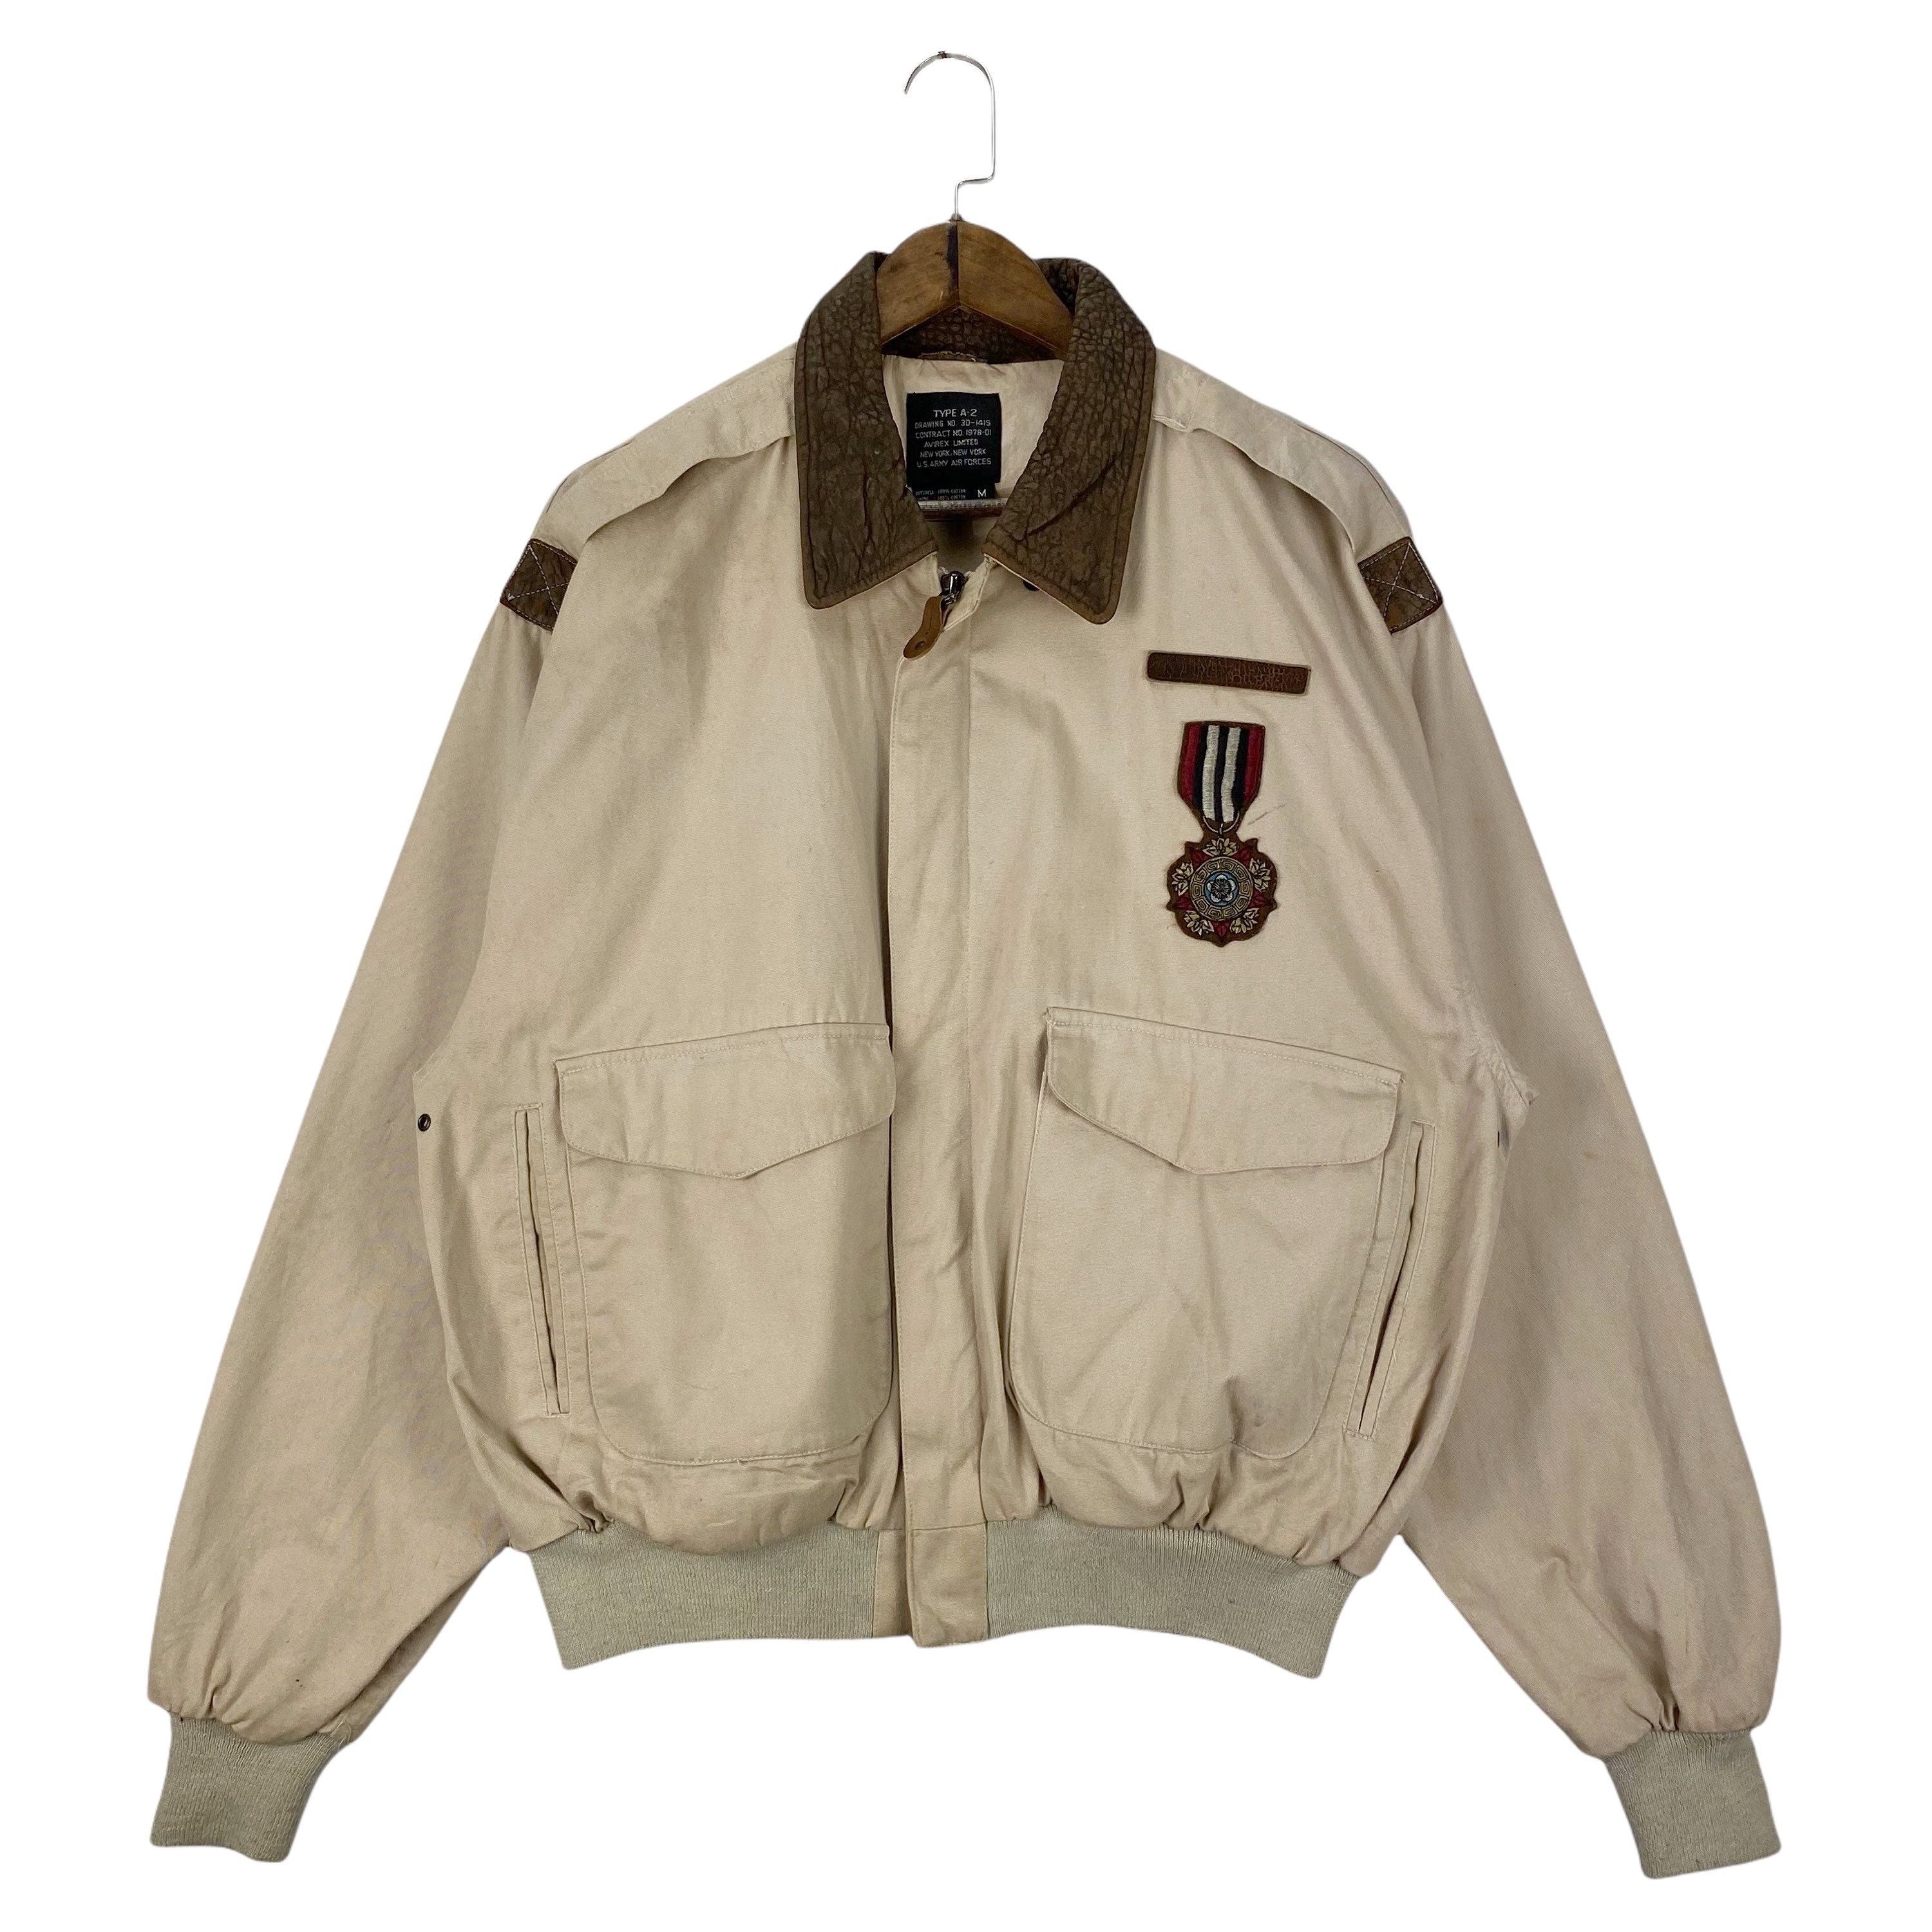 Size-MAvirex Type-A2 jacket  limited